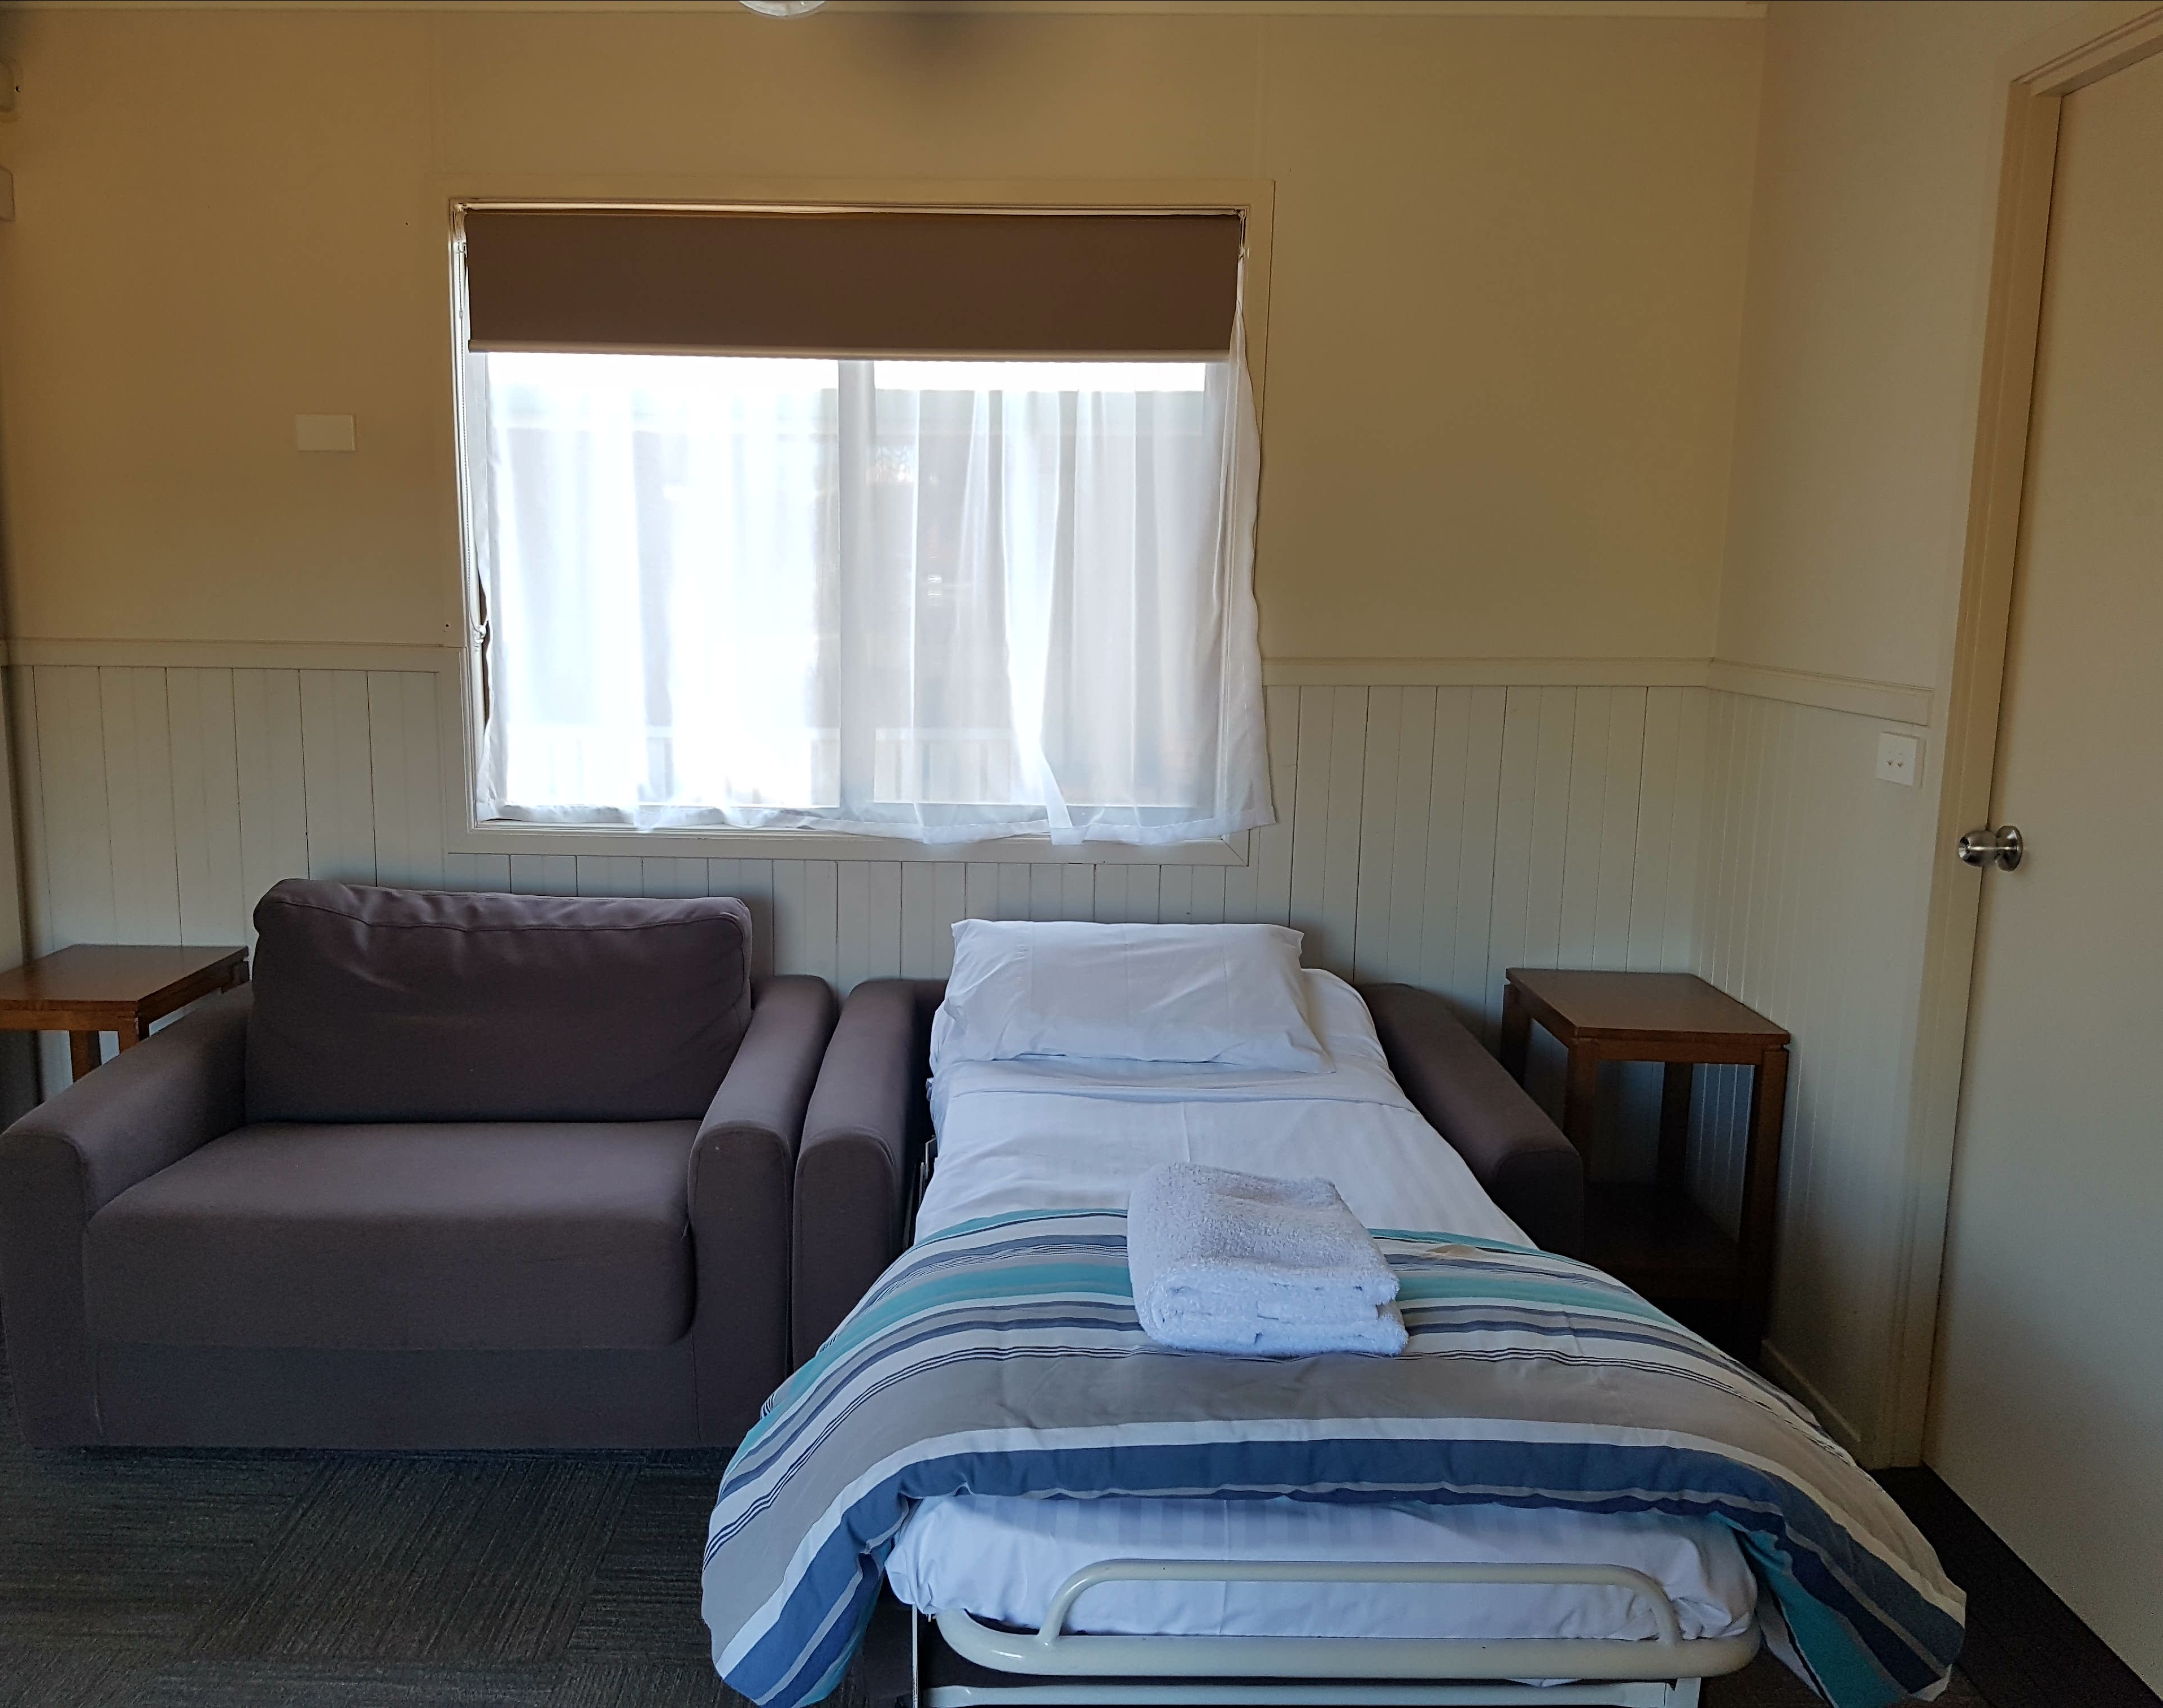 Cabin 1 sofa bed made up - Carotel MotelCarotel Motel